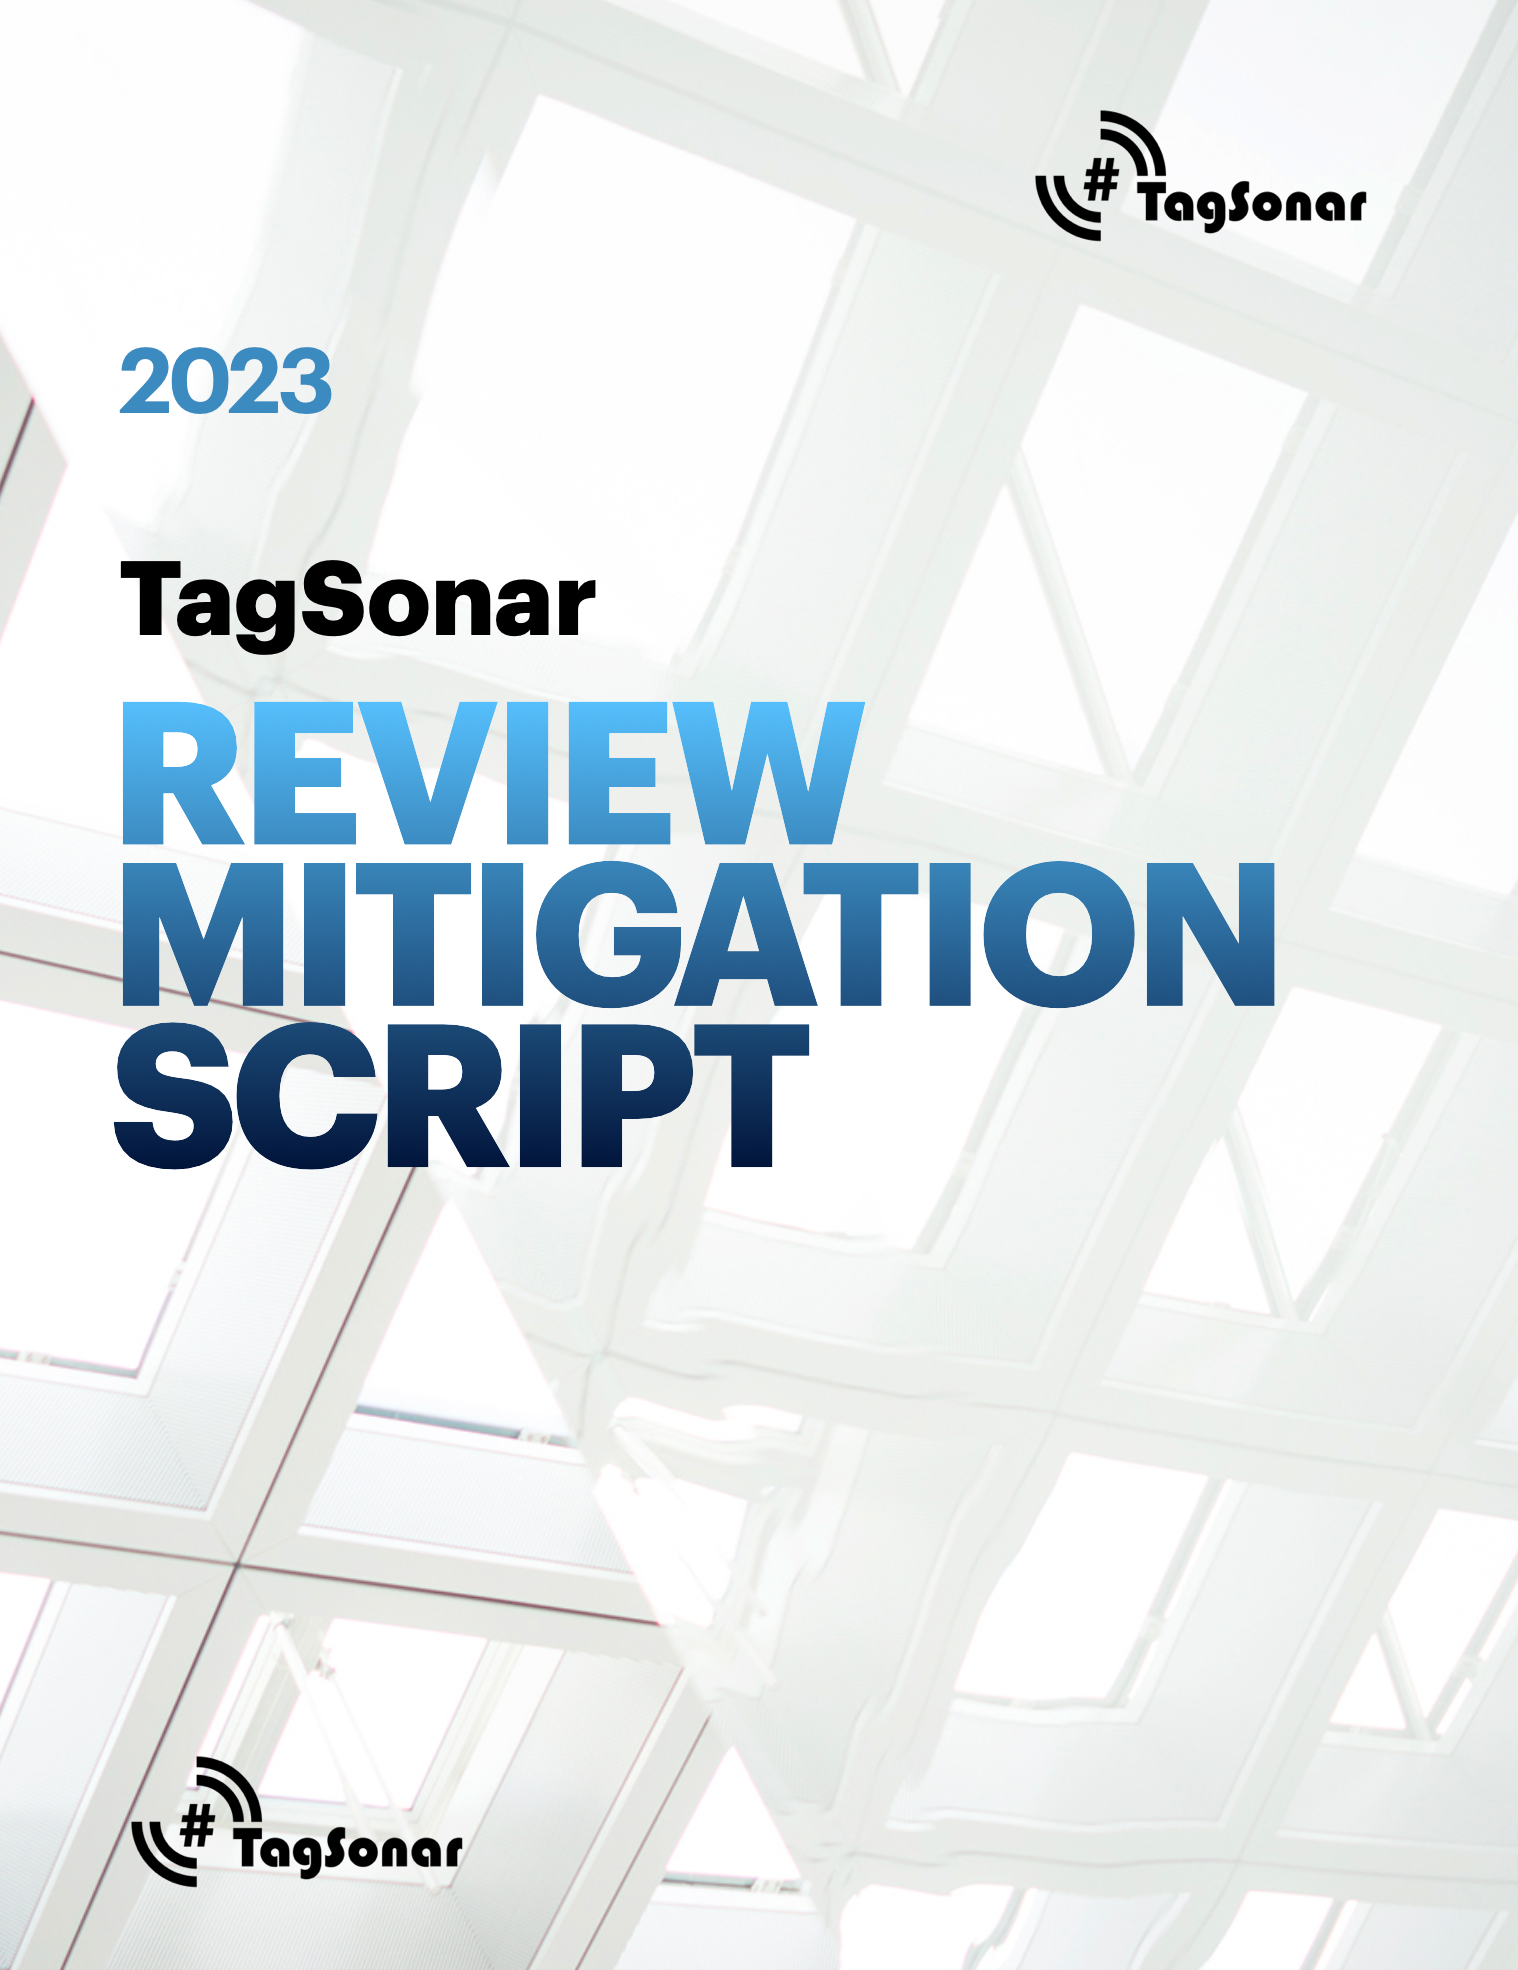 TagSonar Review Mitigation Script